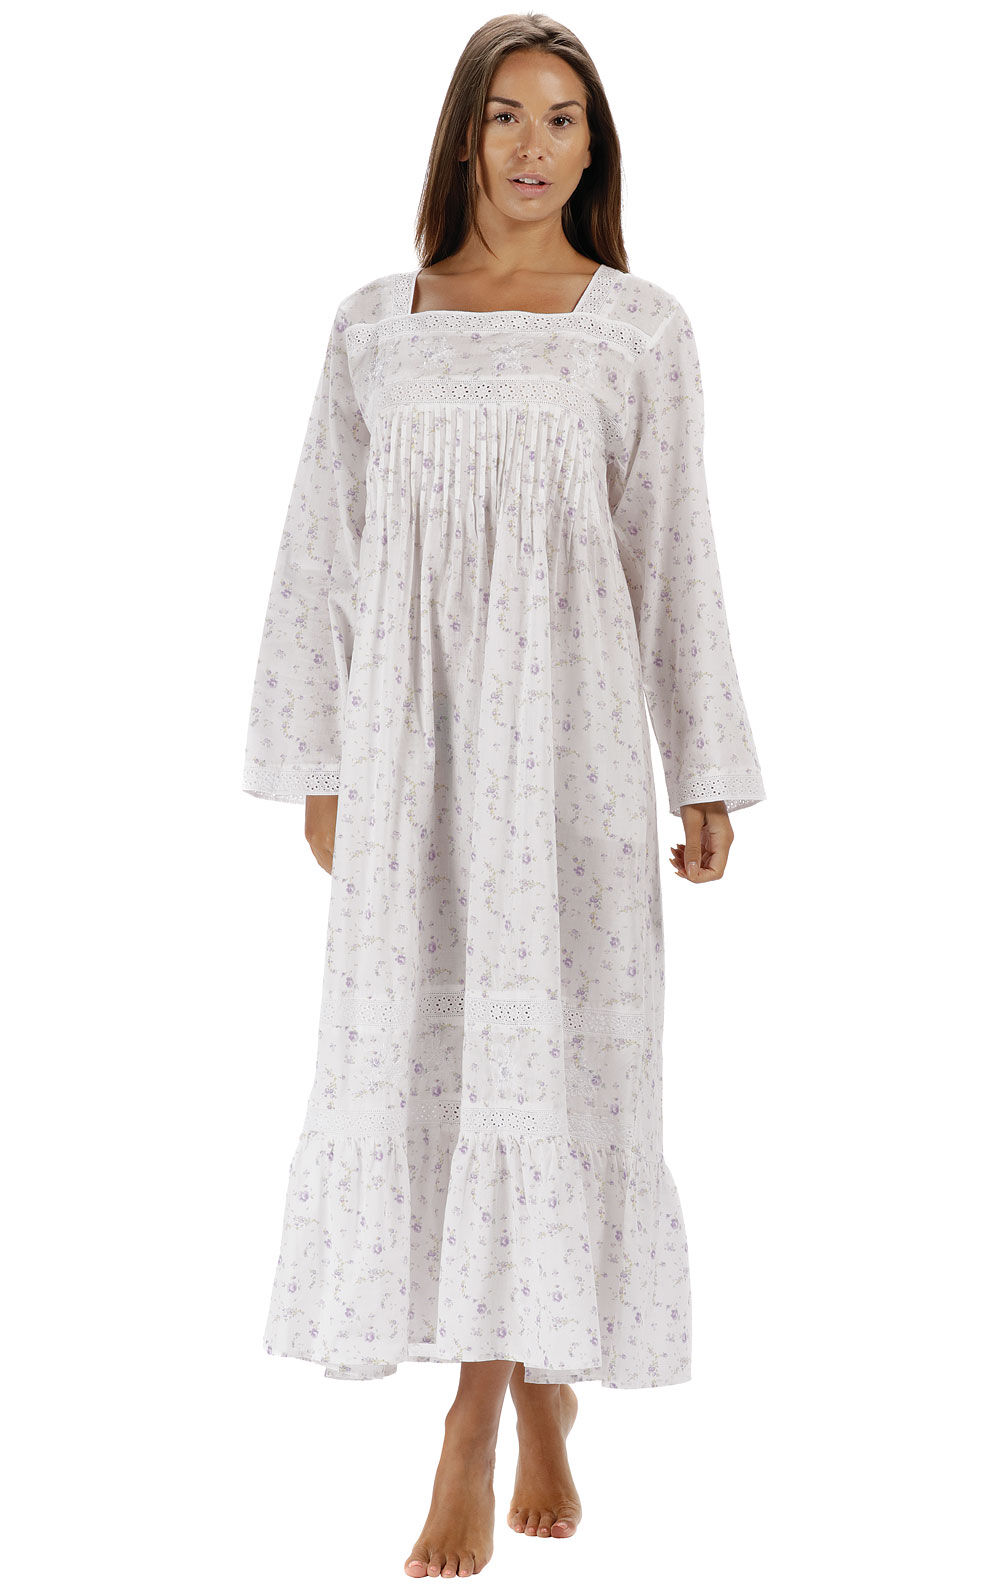 100%  Cotton Nightdress Womens Small Plus Size Nightie Nightgown  Nancy Lilac 